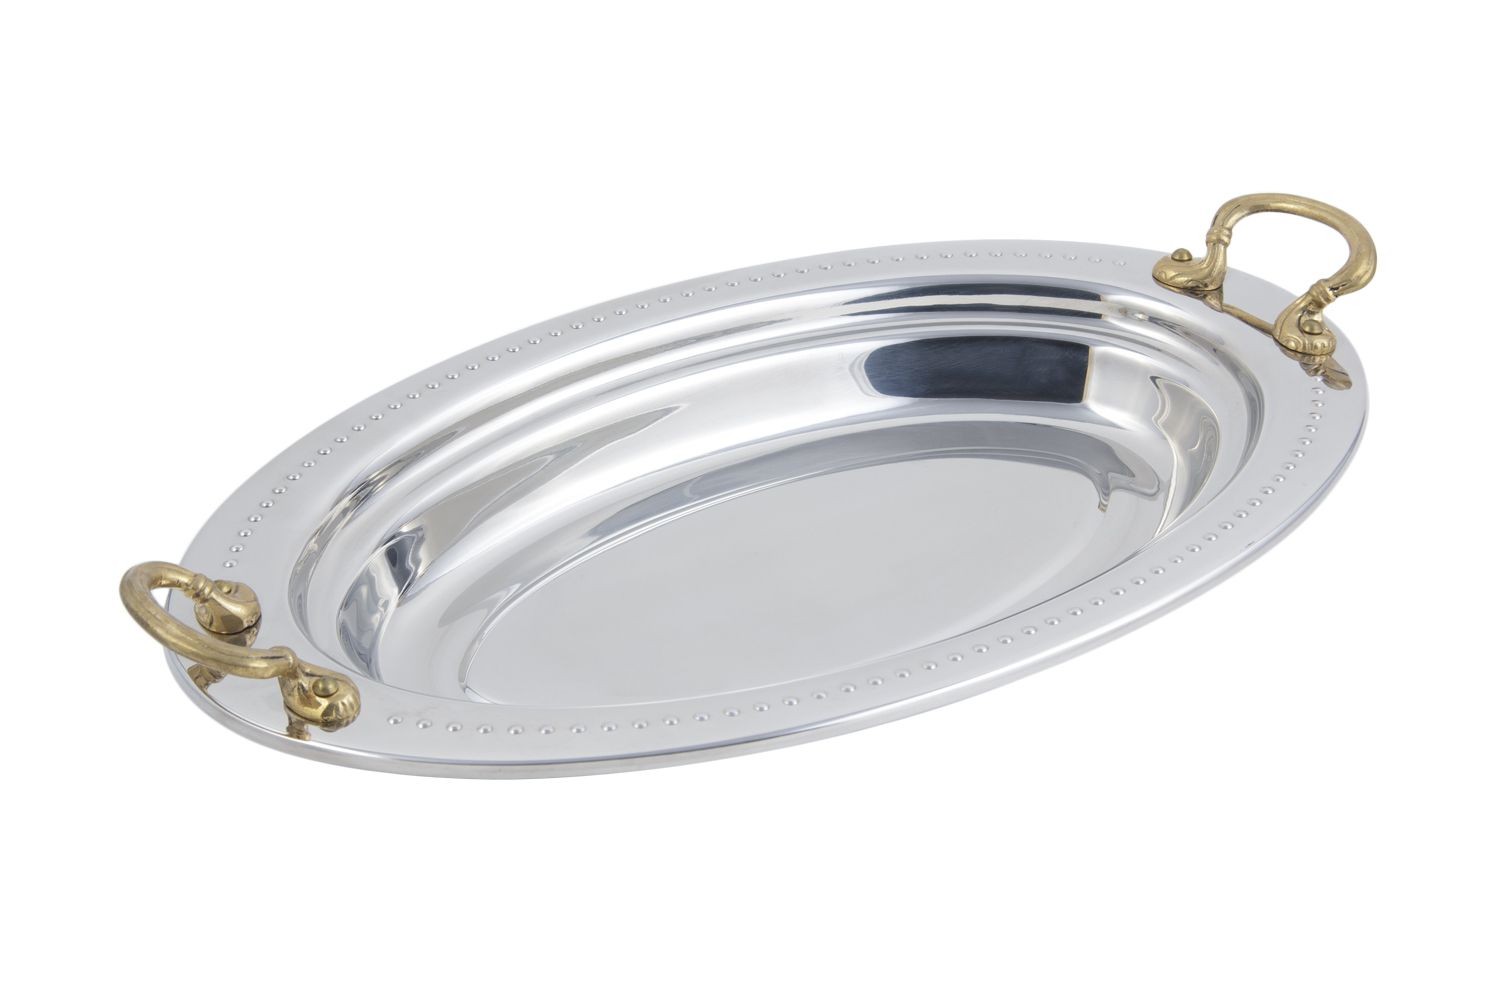 Bon Chef 5388HR Bolero Design Oval Pan with Round Brass Handles, 2 1/2 Qt.